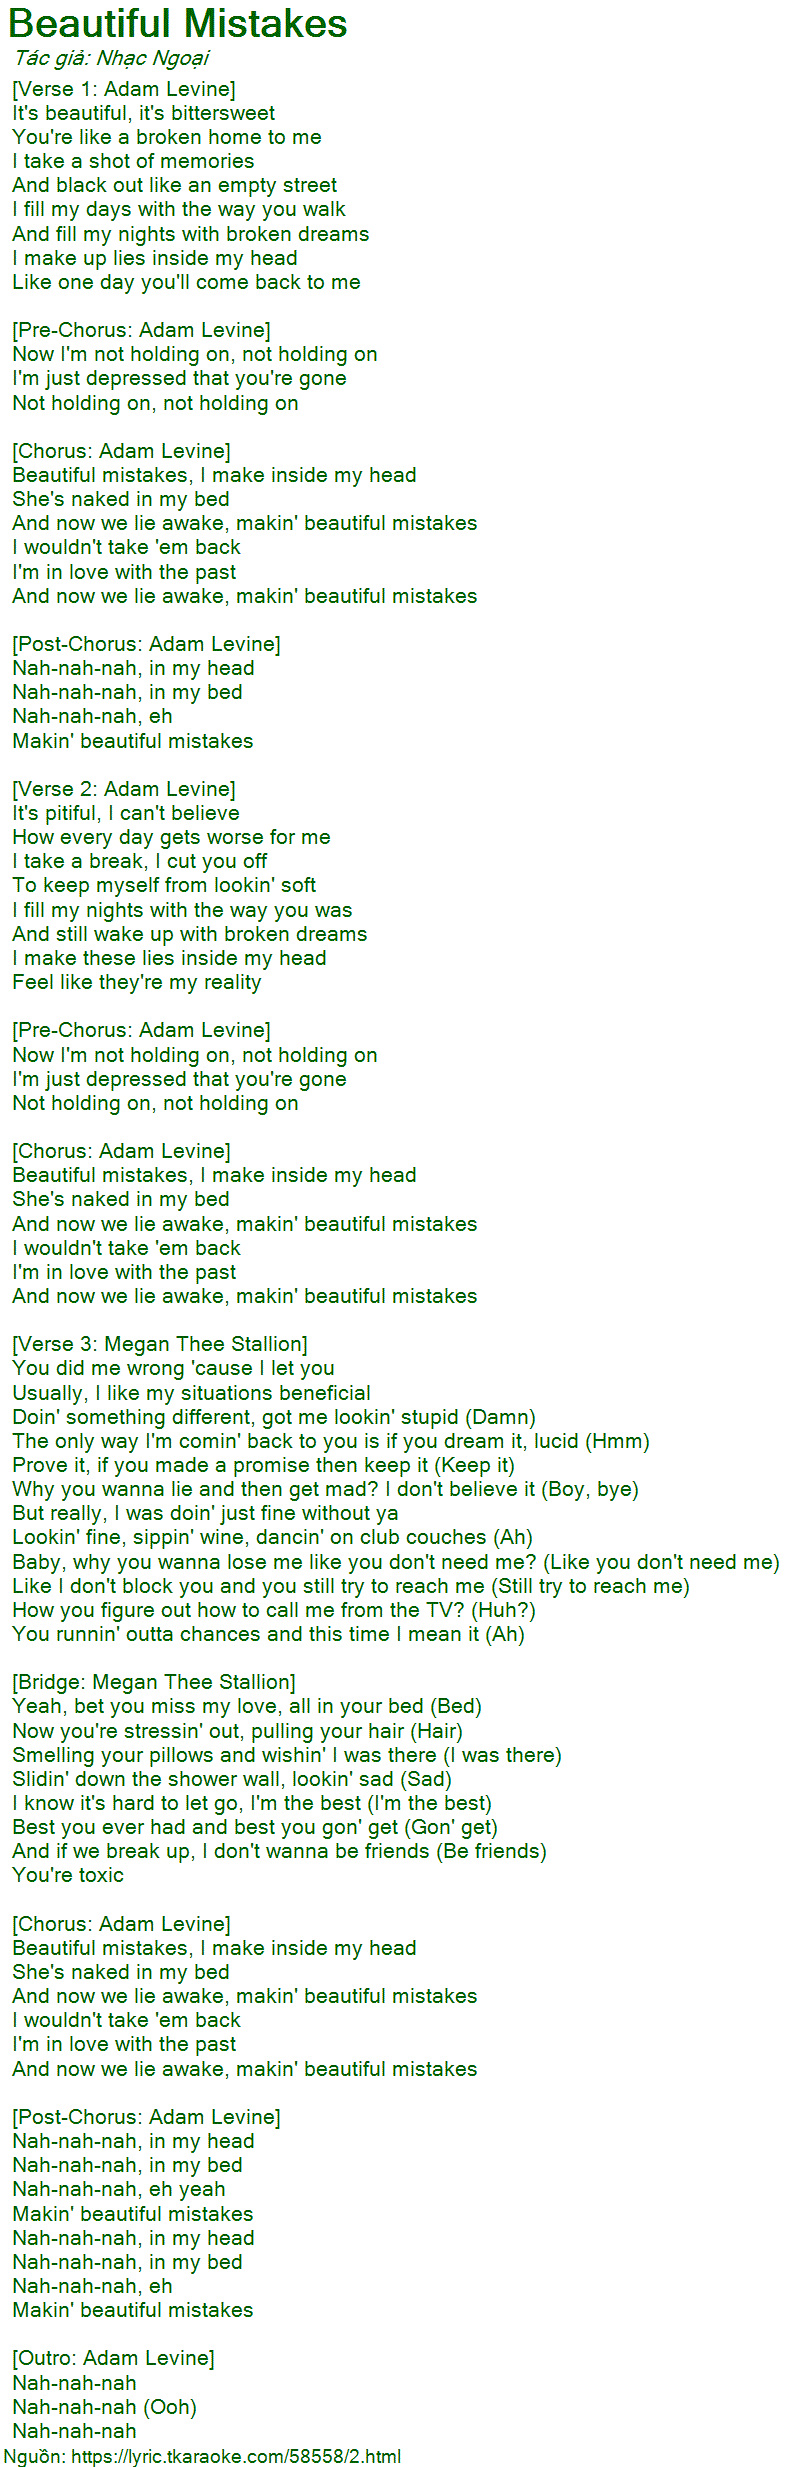 Maroon 5 beautiful mistakes lyrics